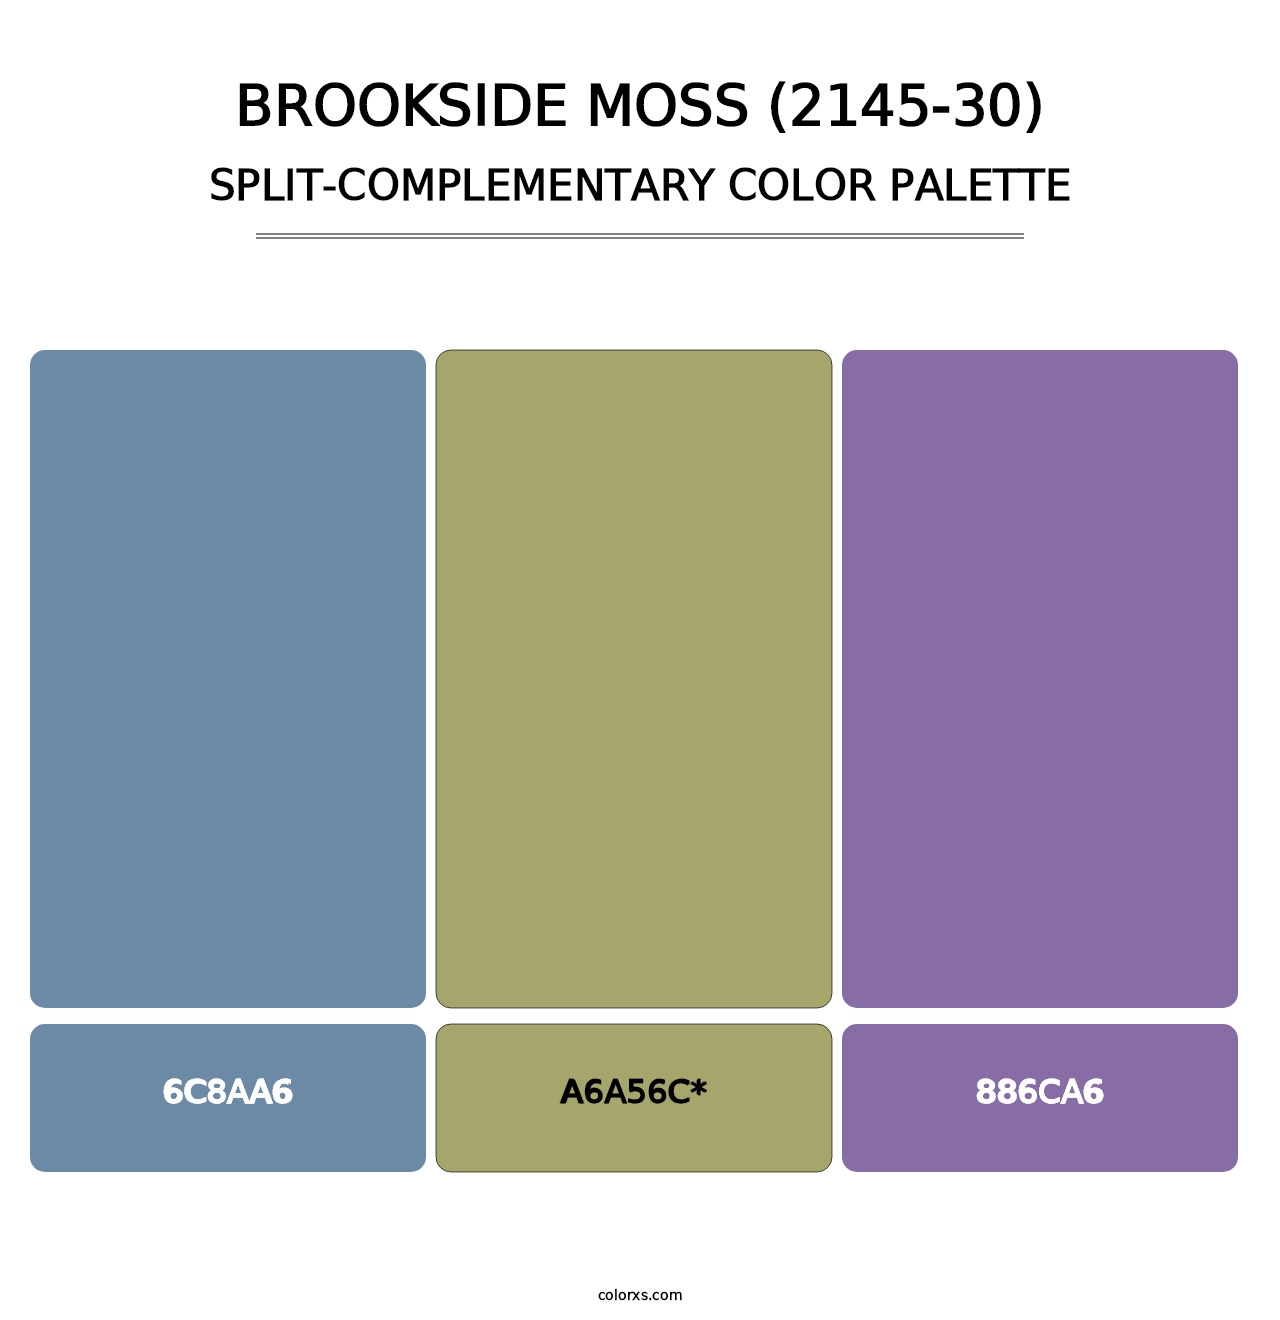 Brookside Moss (2145-30) - Split-Complementary Color Palette